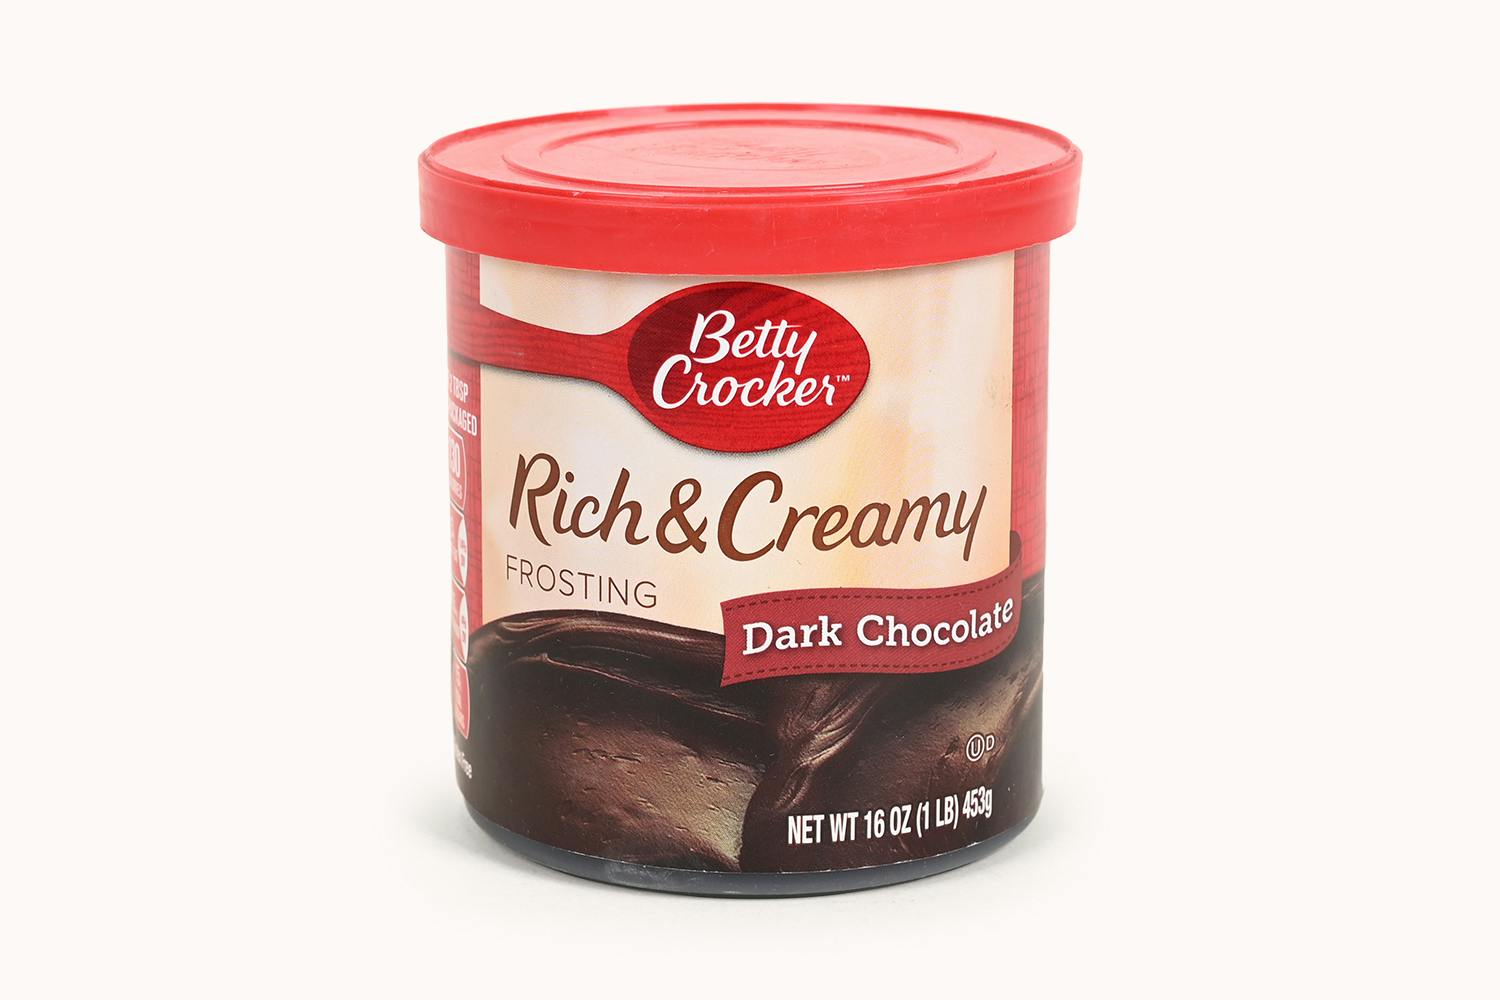 Betty Crocker Rich & Cream Frosting Dark Chocolate